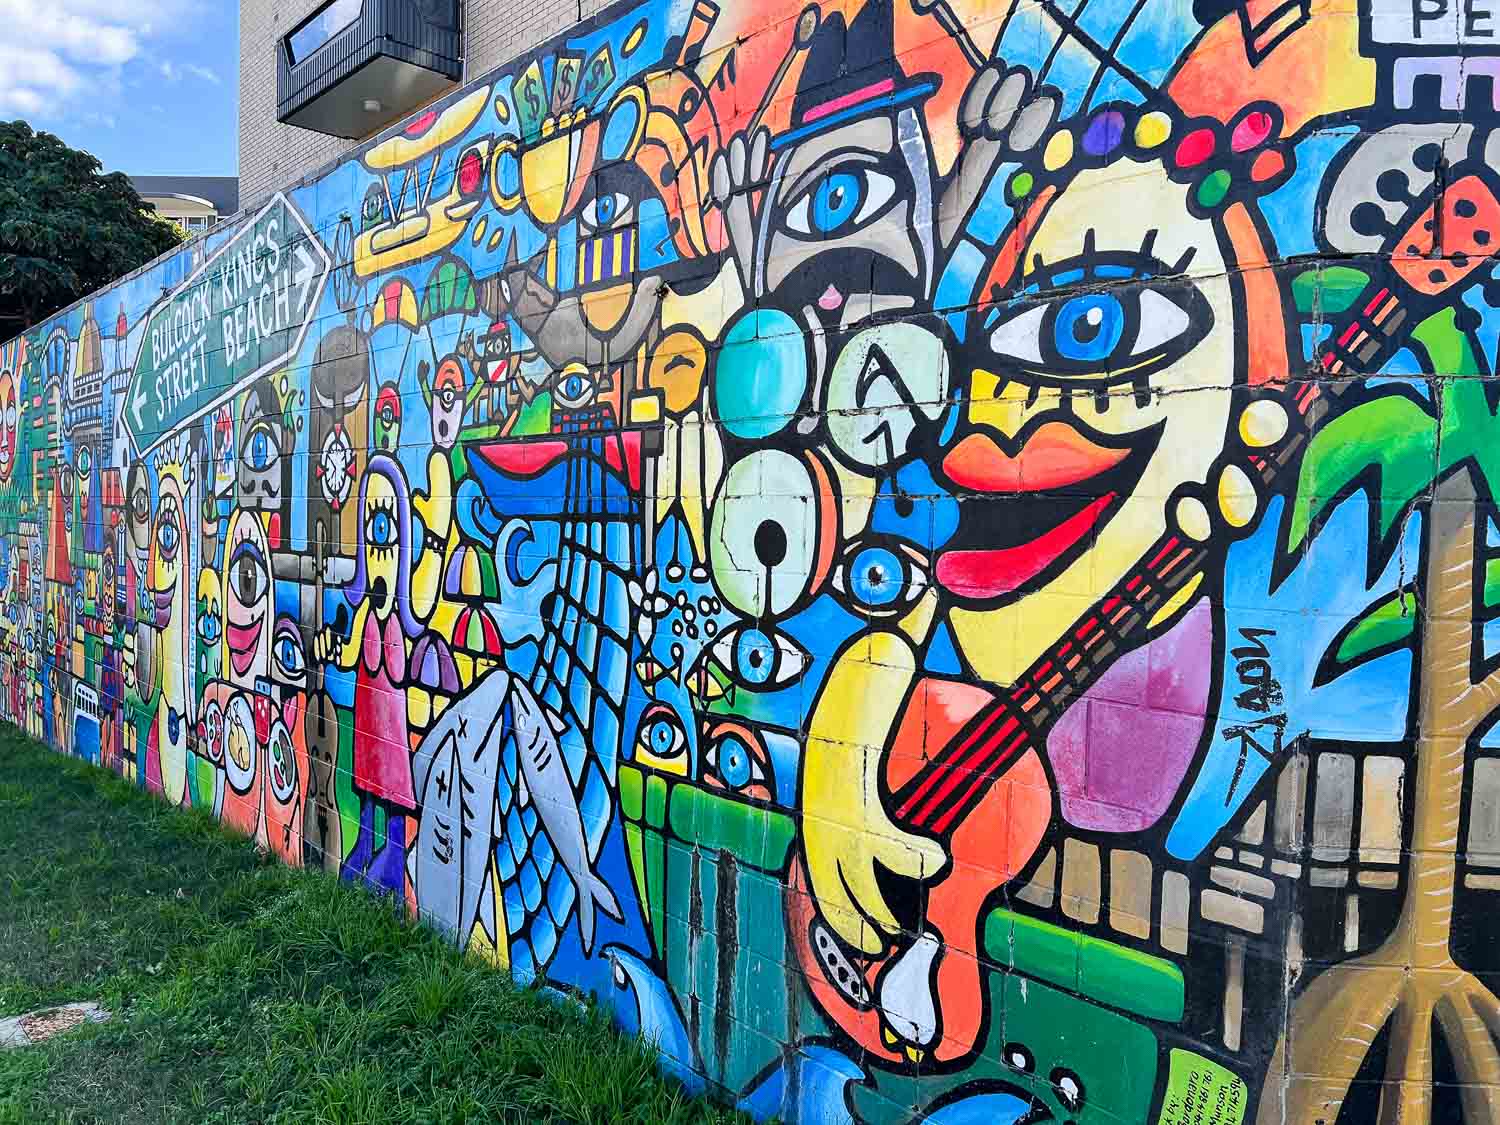 Caloundra street art, Queensland, Australia